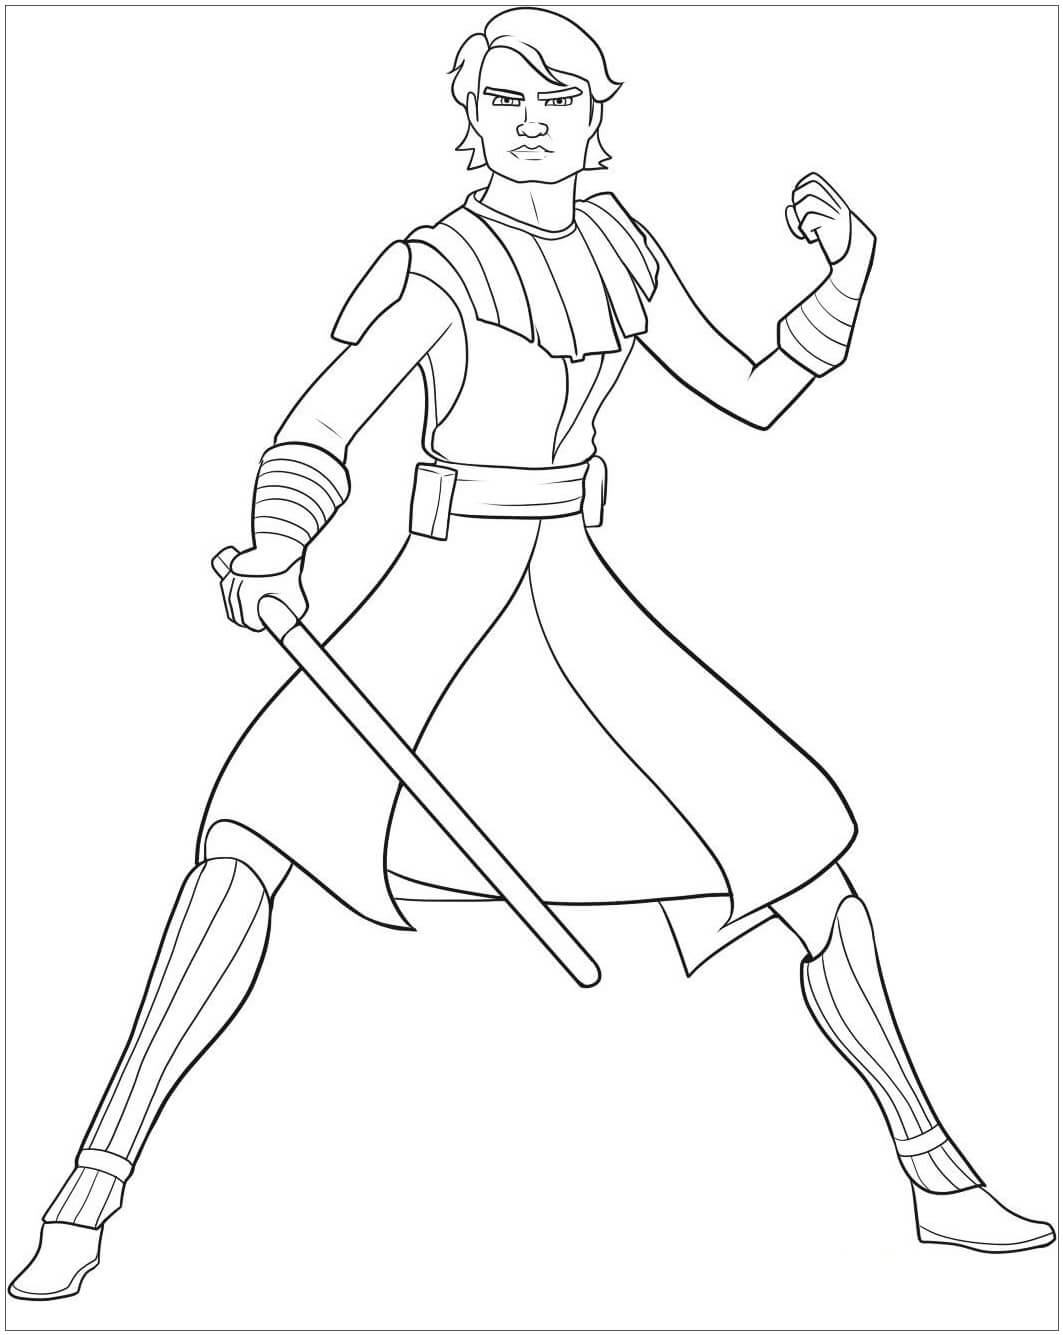 Anakin Skywalker Star Wars coloring page